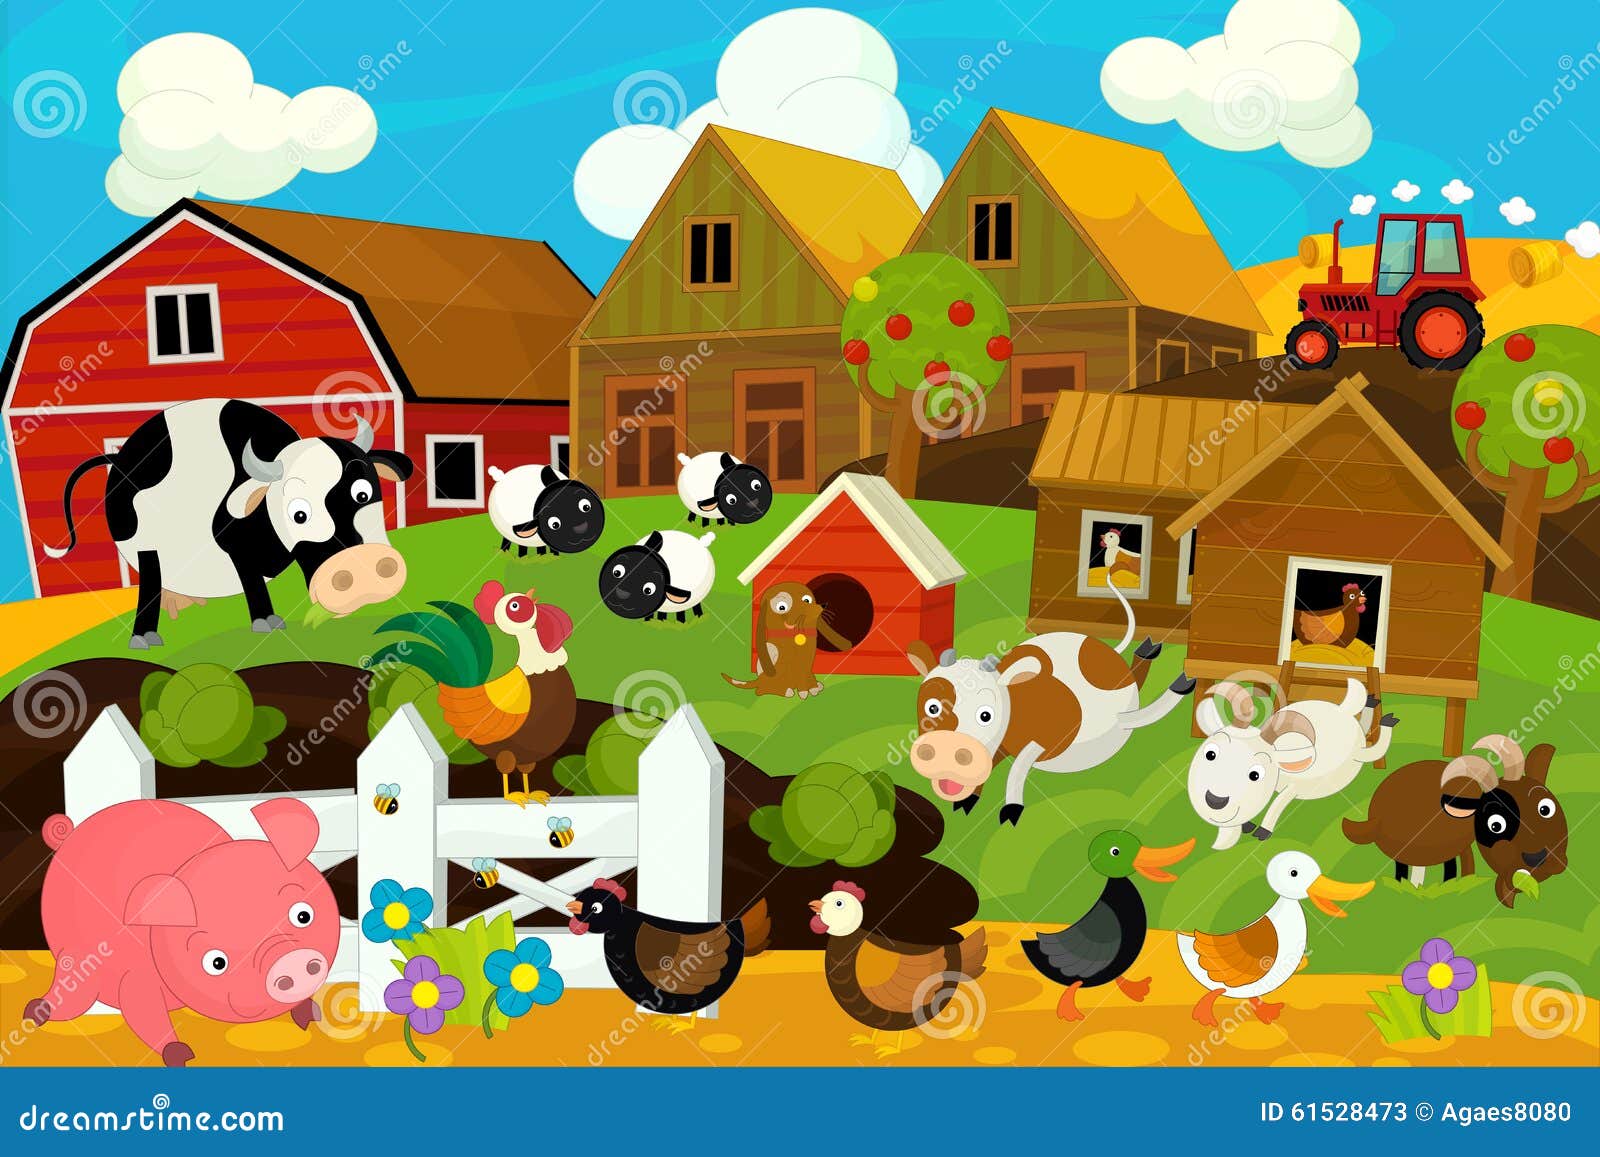 cartoon farm scene beautiful colorful illustration children 61528473